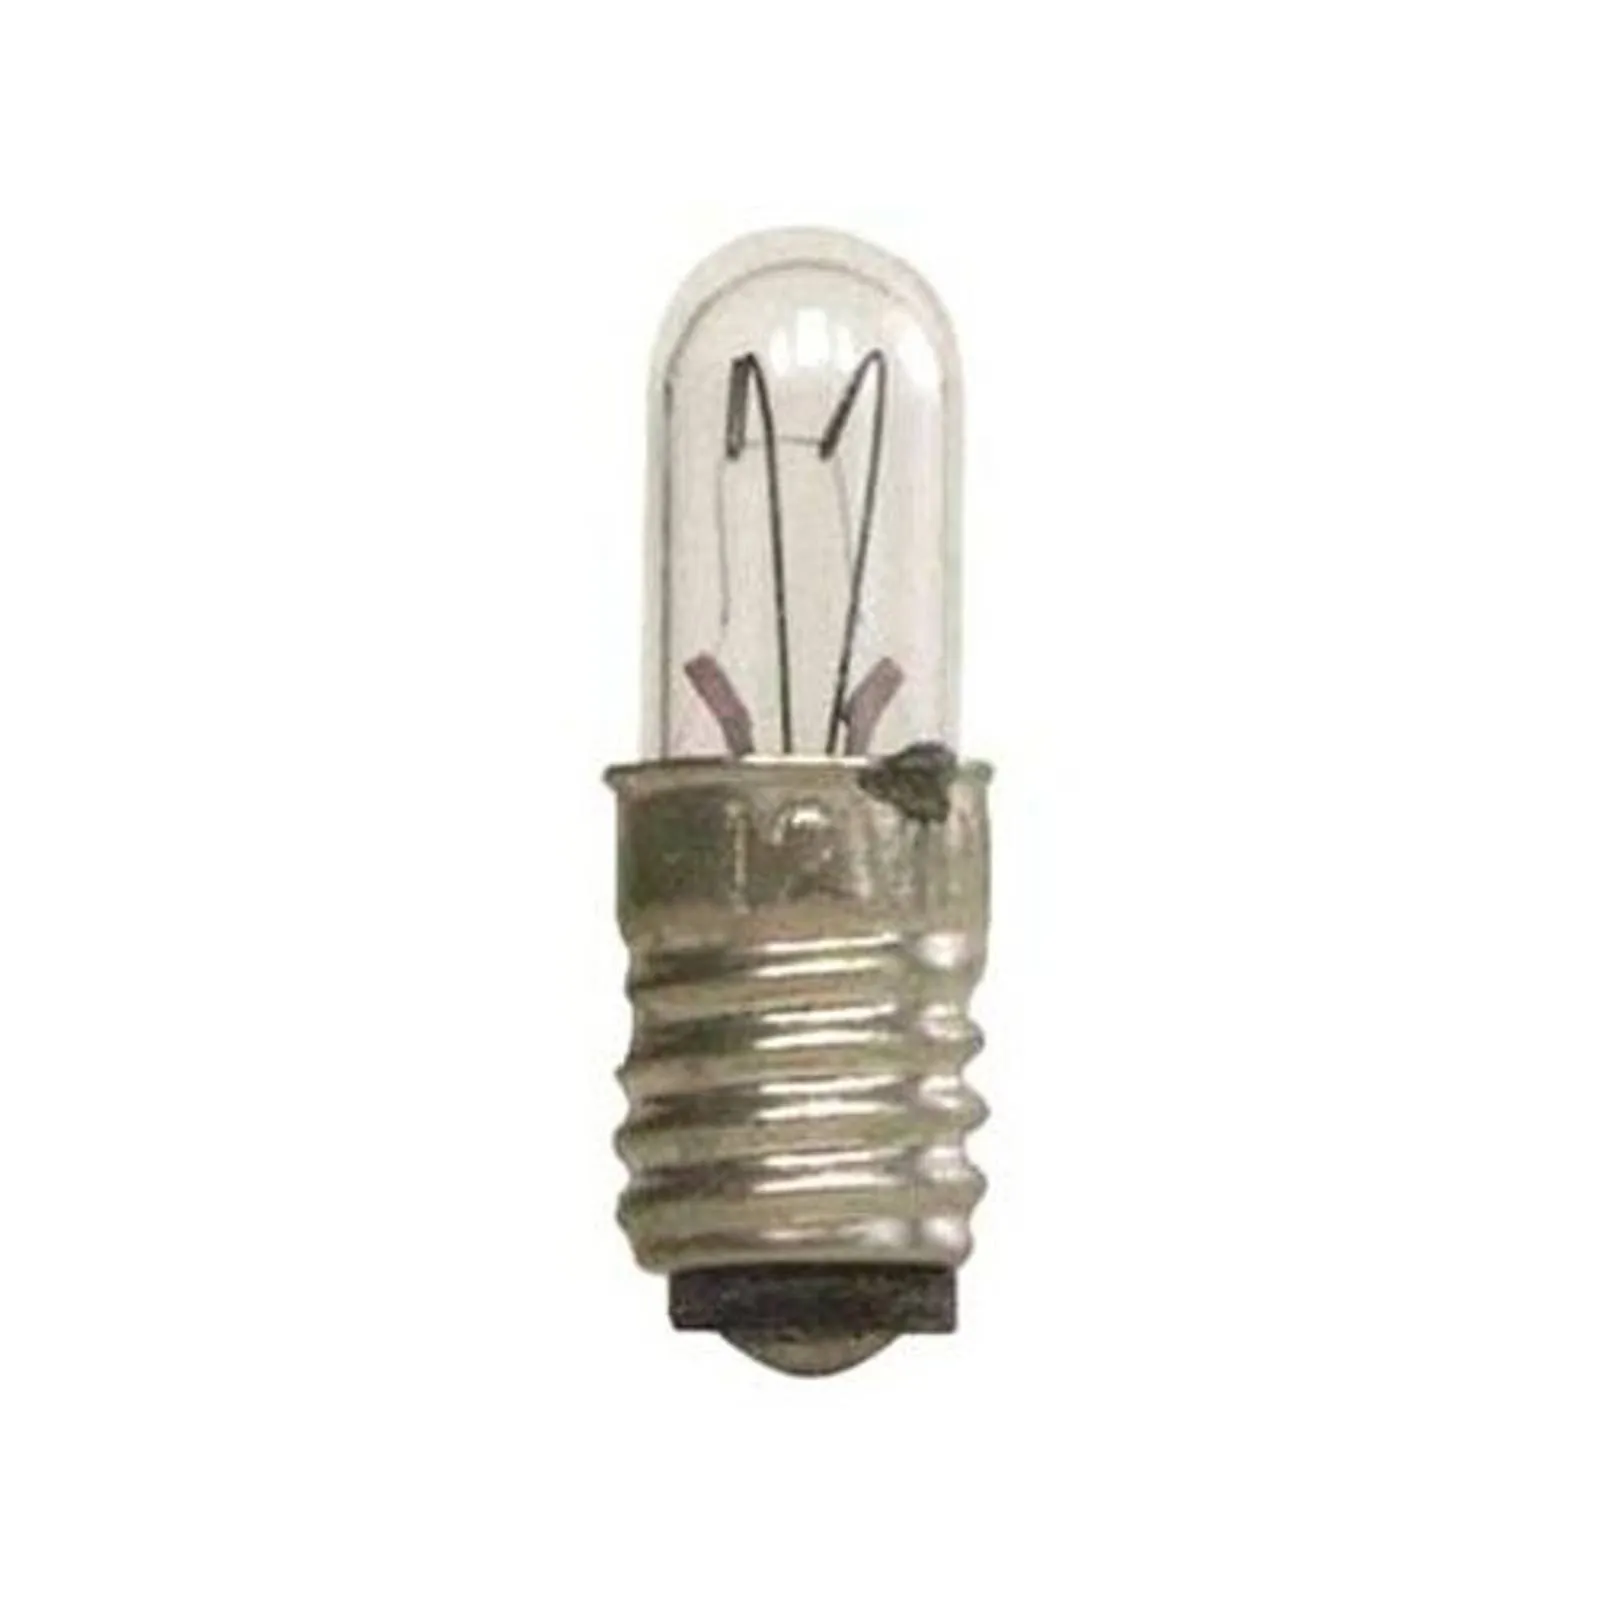 E5 1.1 W 12 V spare bulbs, 5-pack, clear